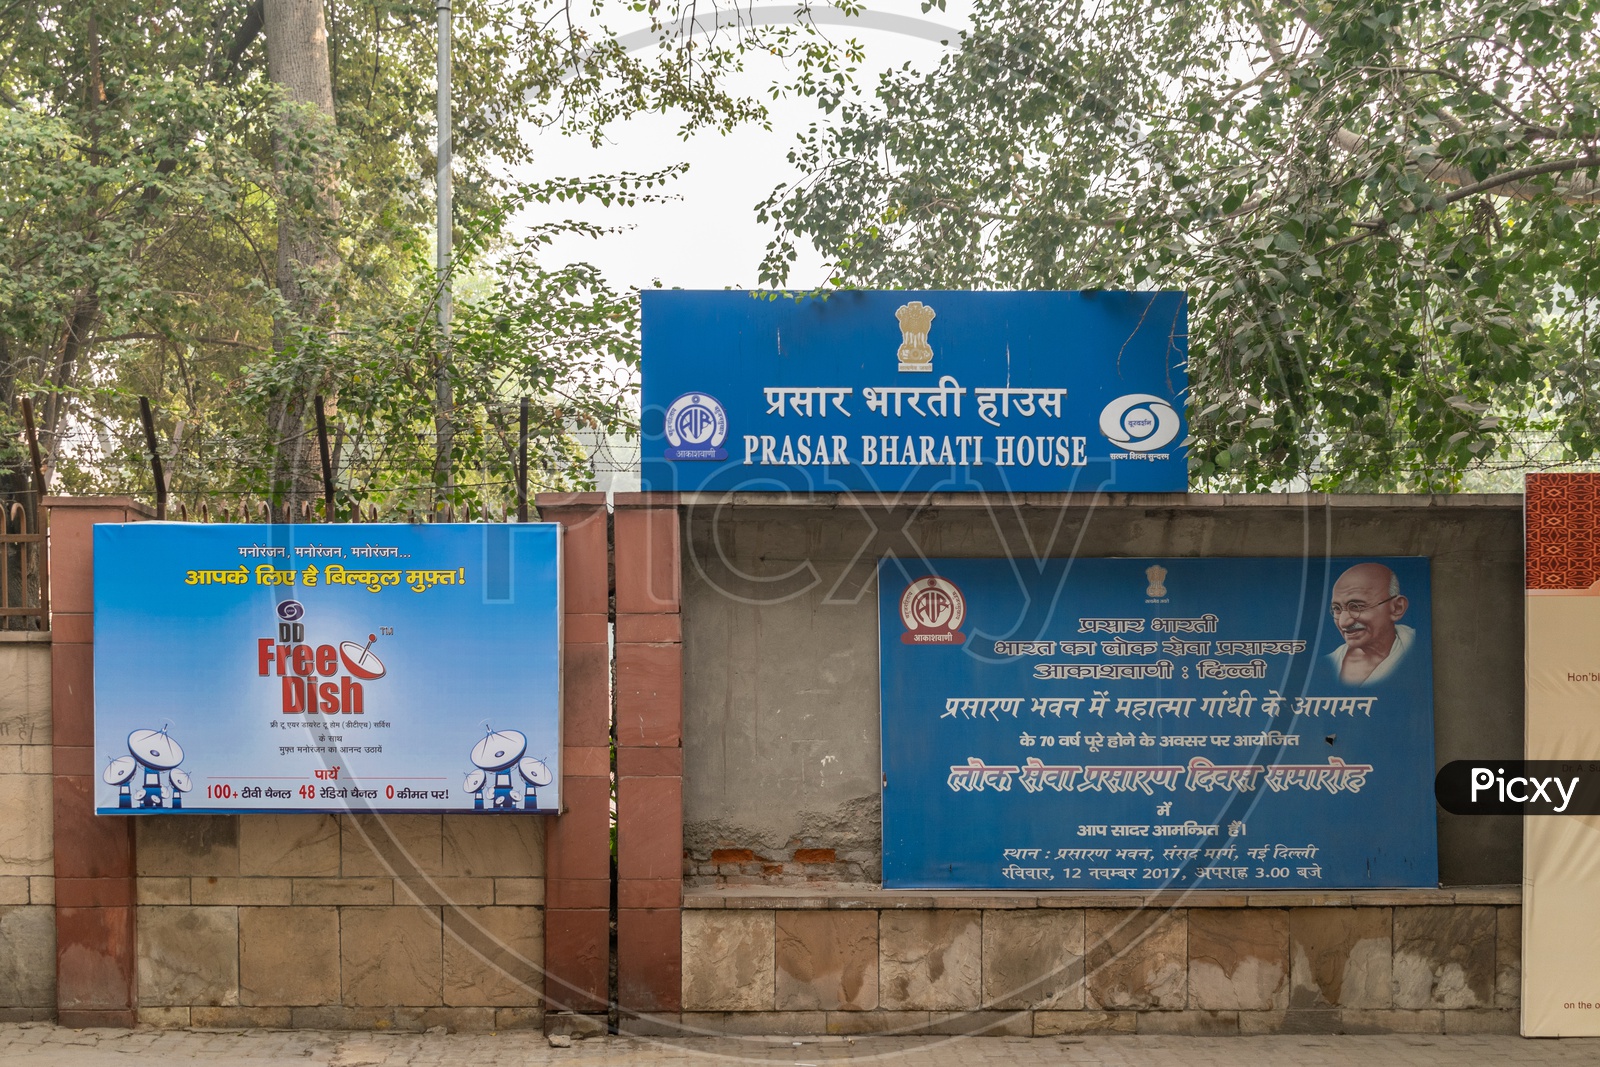 AIR All India Radio Prasar Bharati House Name Board in Delhi